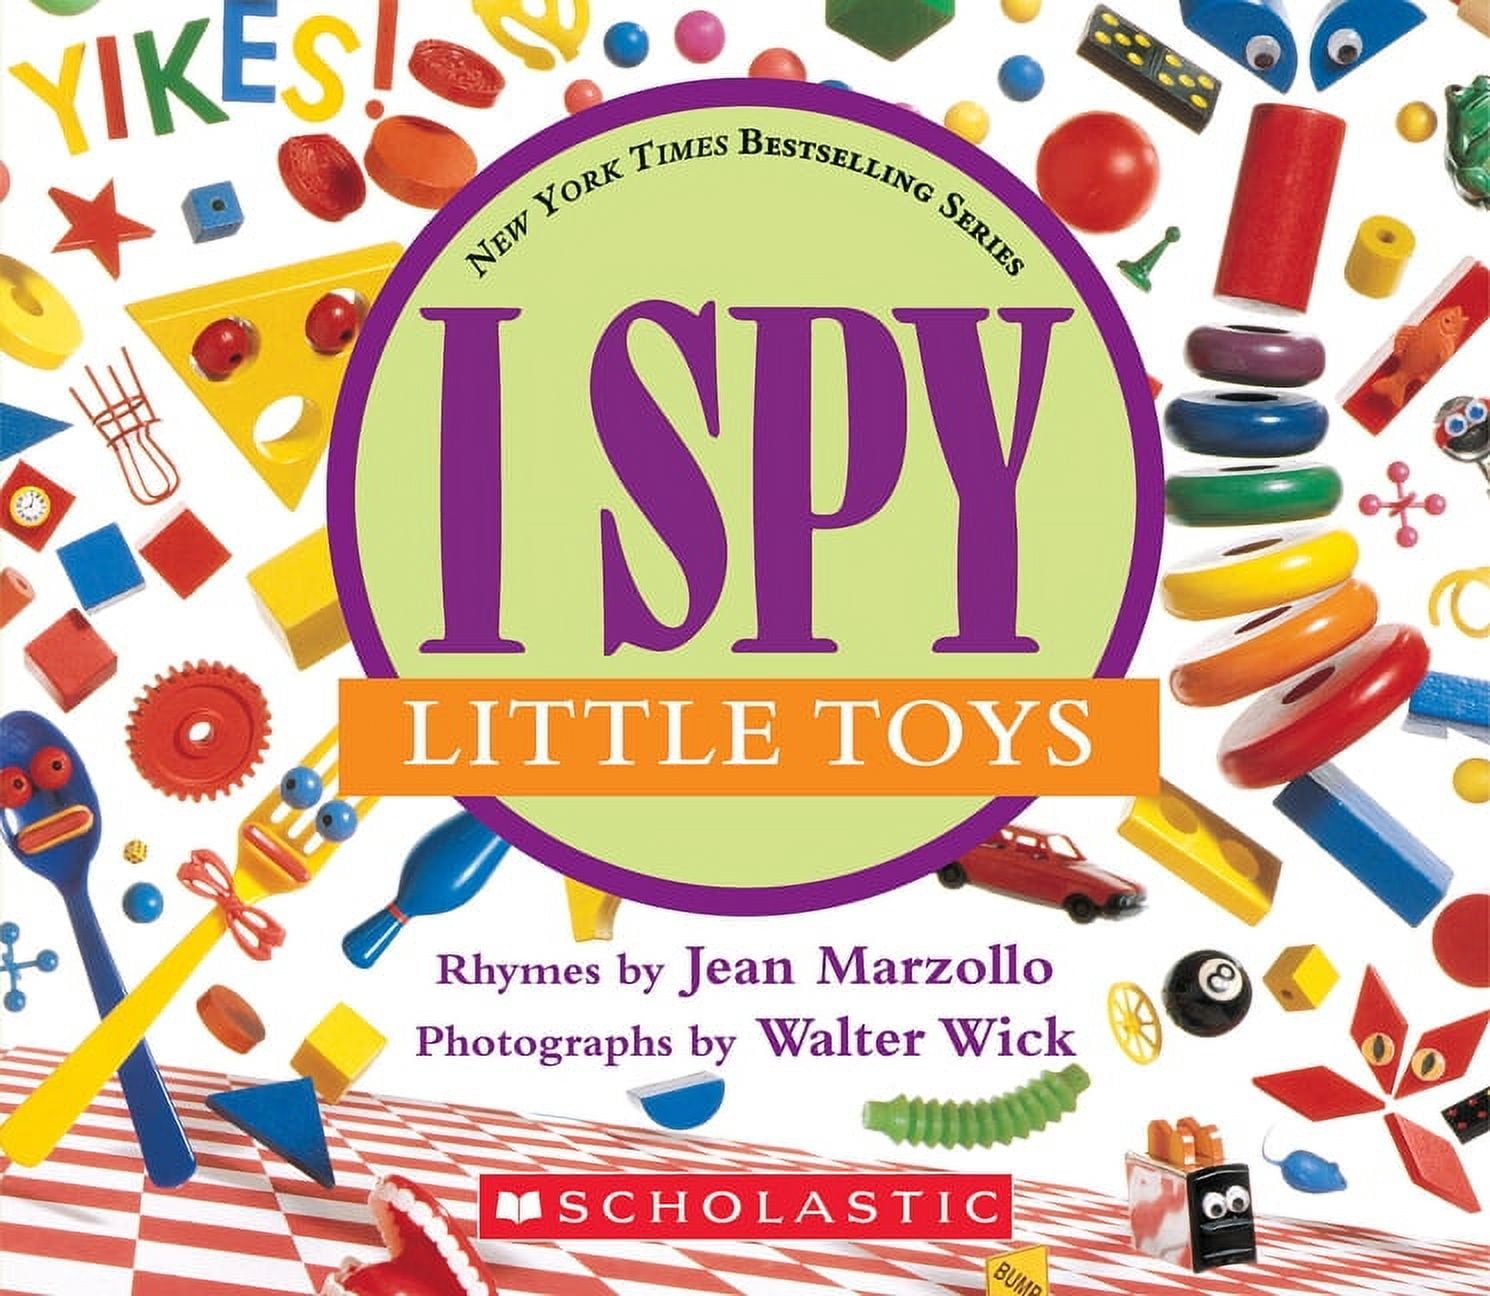 I Spy PURPLE Things! Color Series Print & Make Books (includes a digital  BOOM Card book)